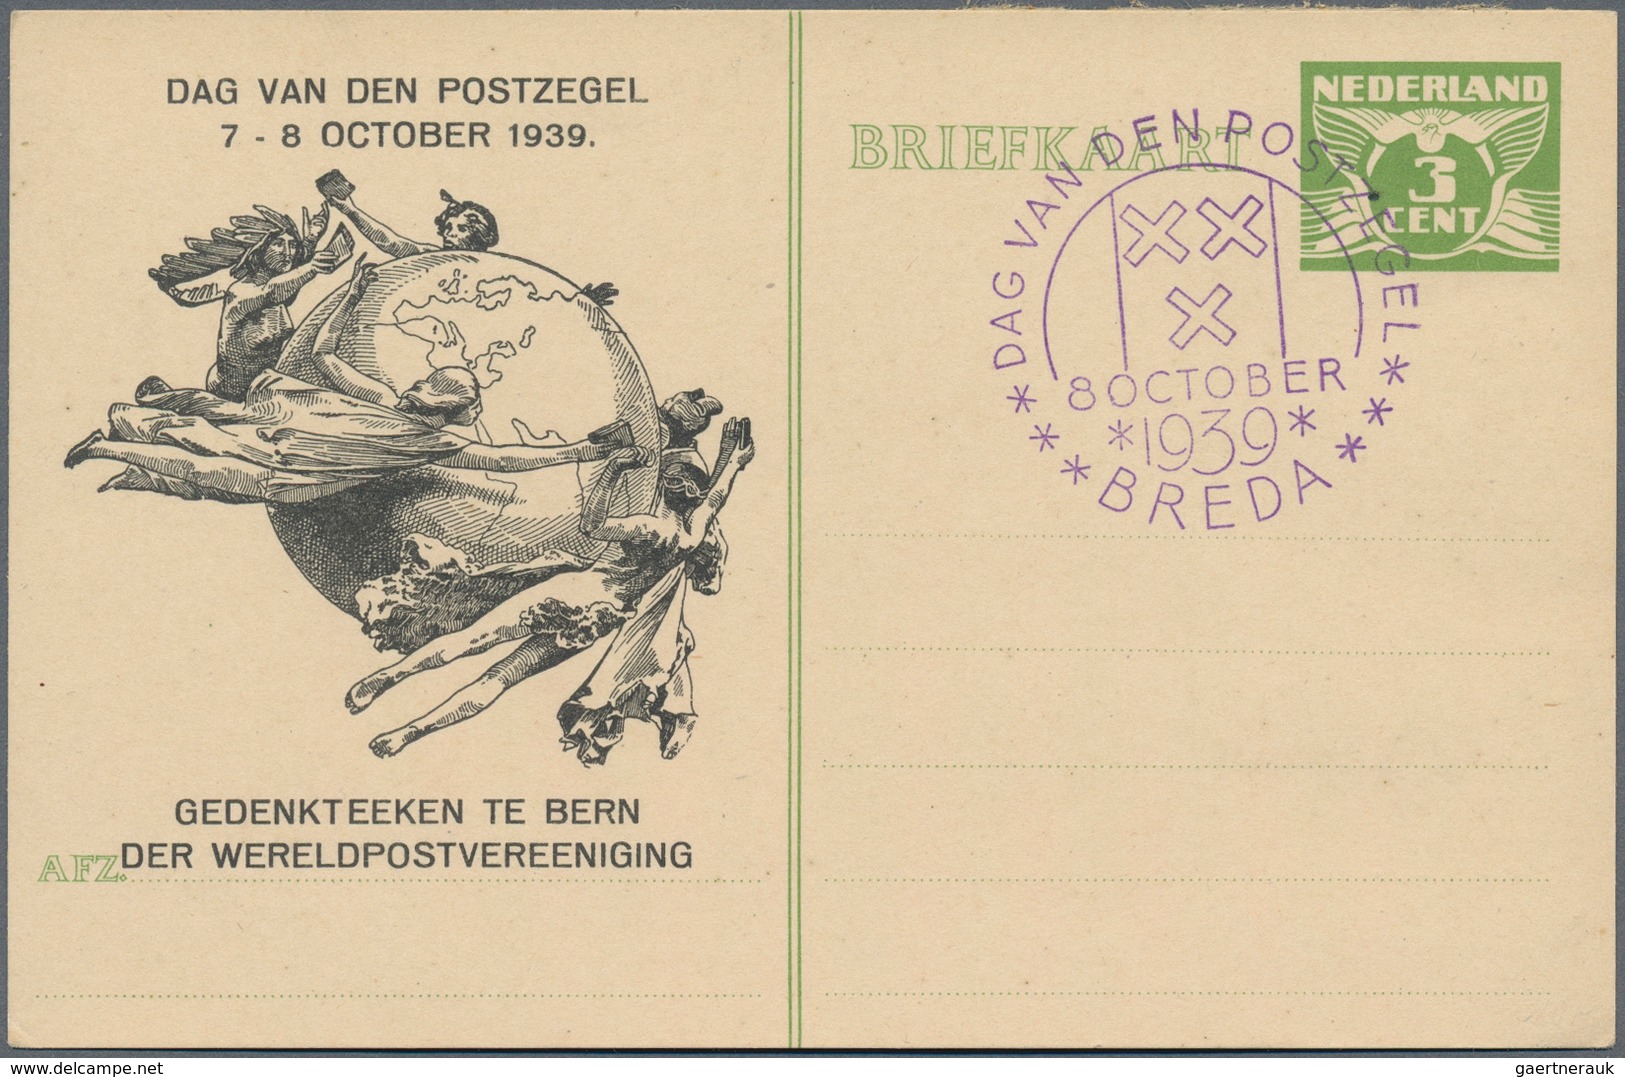 Niederlande - Ganzsachen: 1870/1970 (ca.), Lot Of Apprx. 110 Used/unused Stationeries, Incl. Better - Ganzsachen